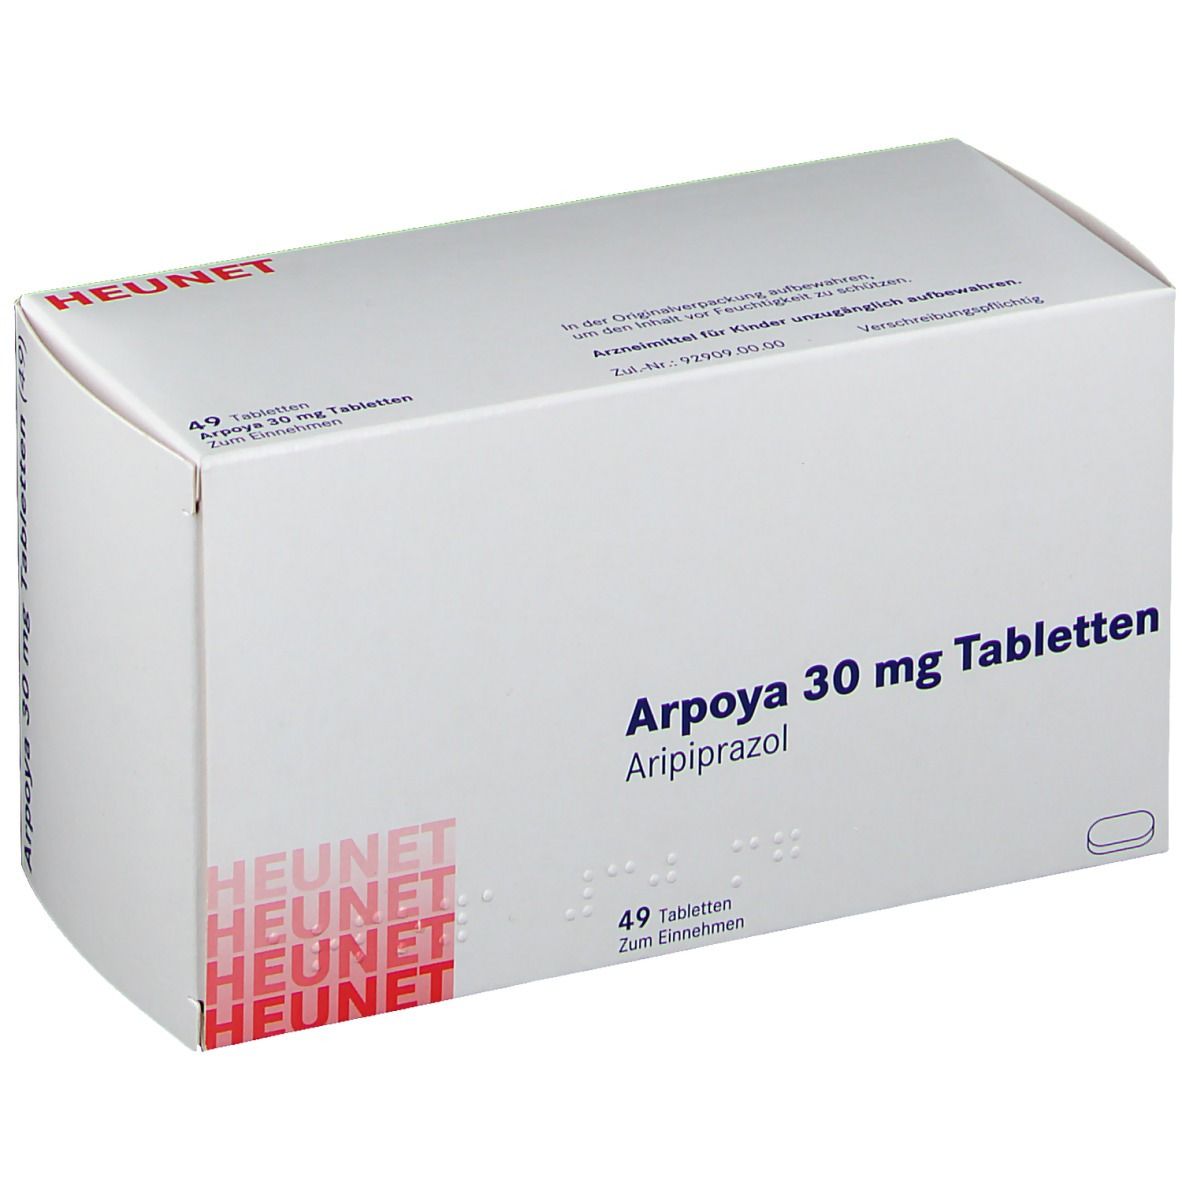 Arpoya 30 mg